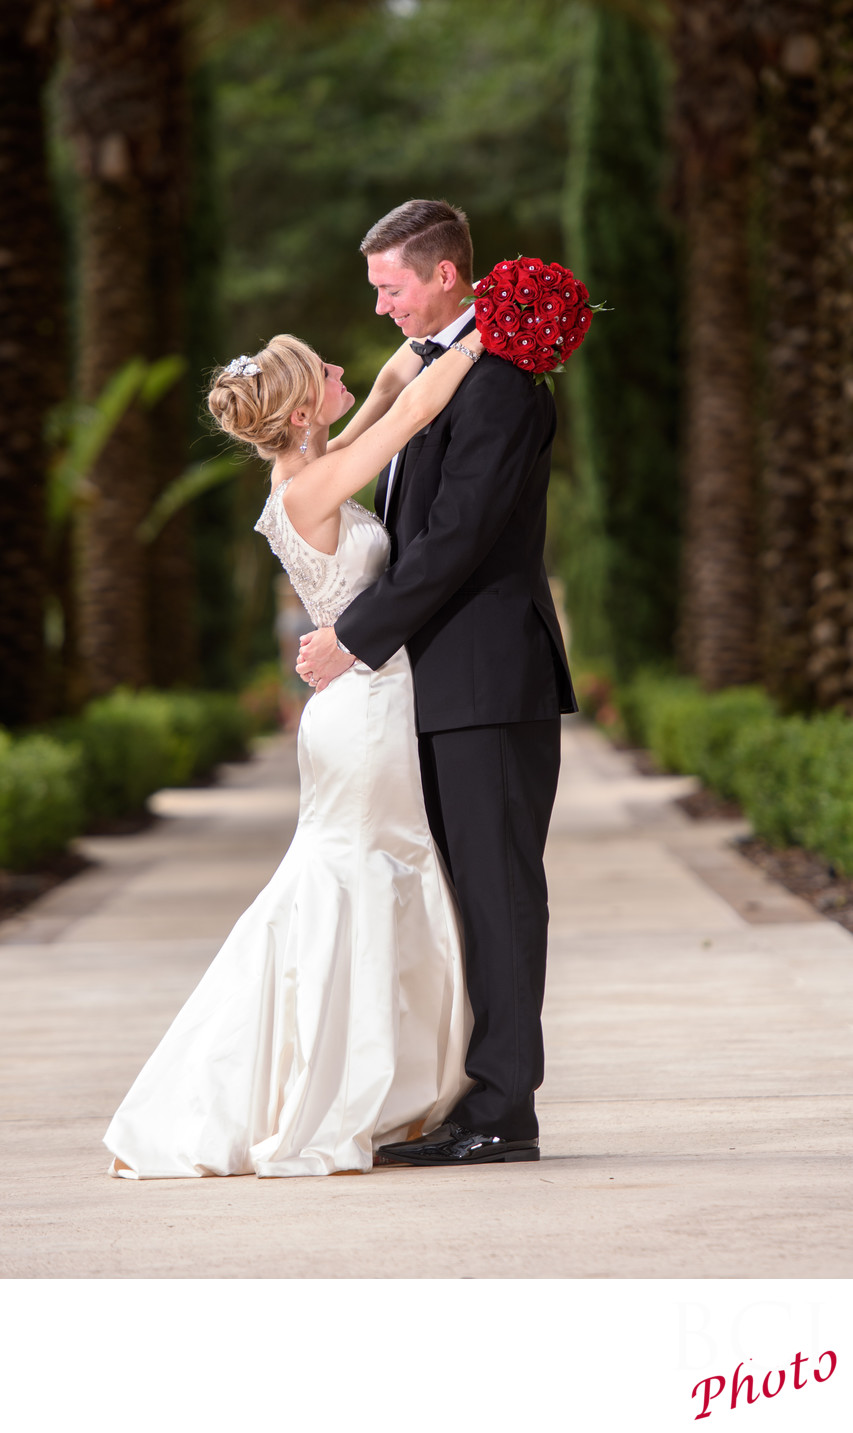 Central Floridas finest wedding photographers